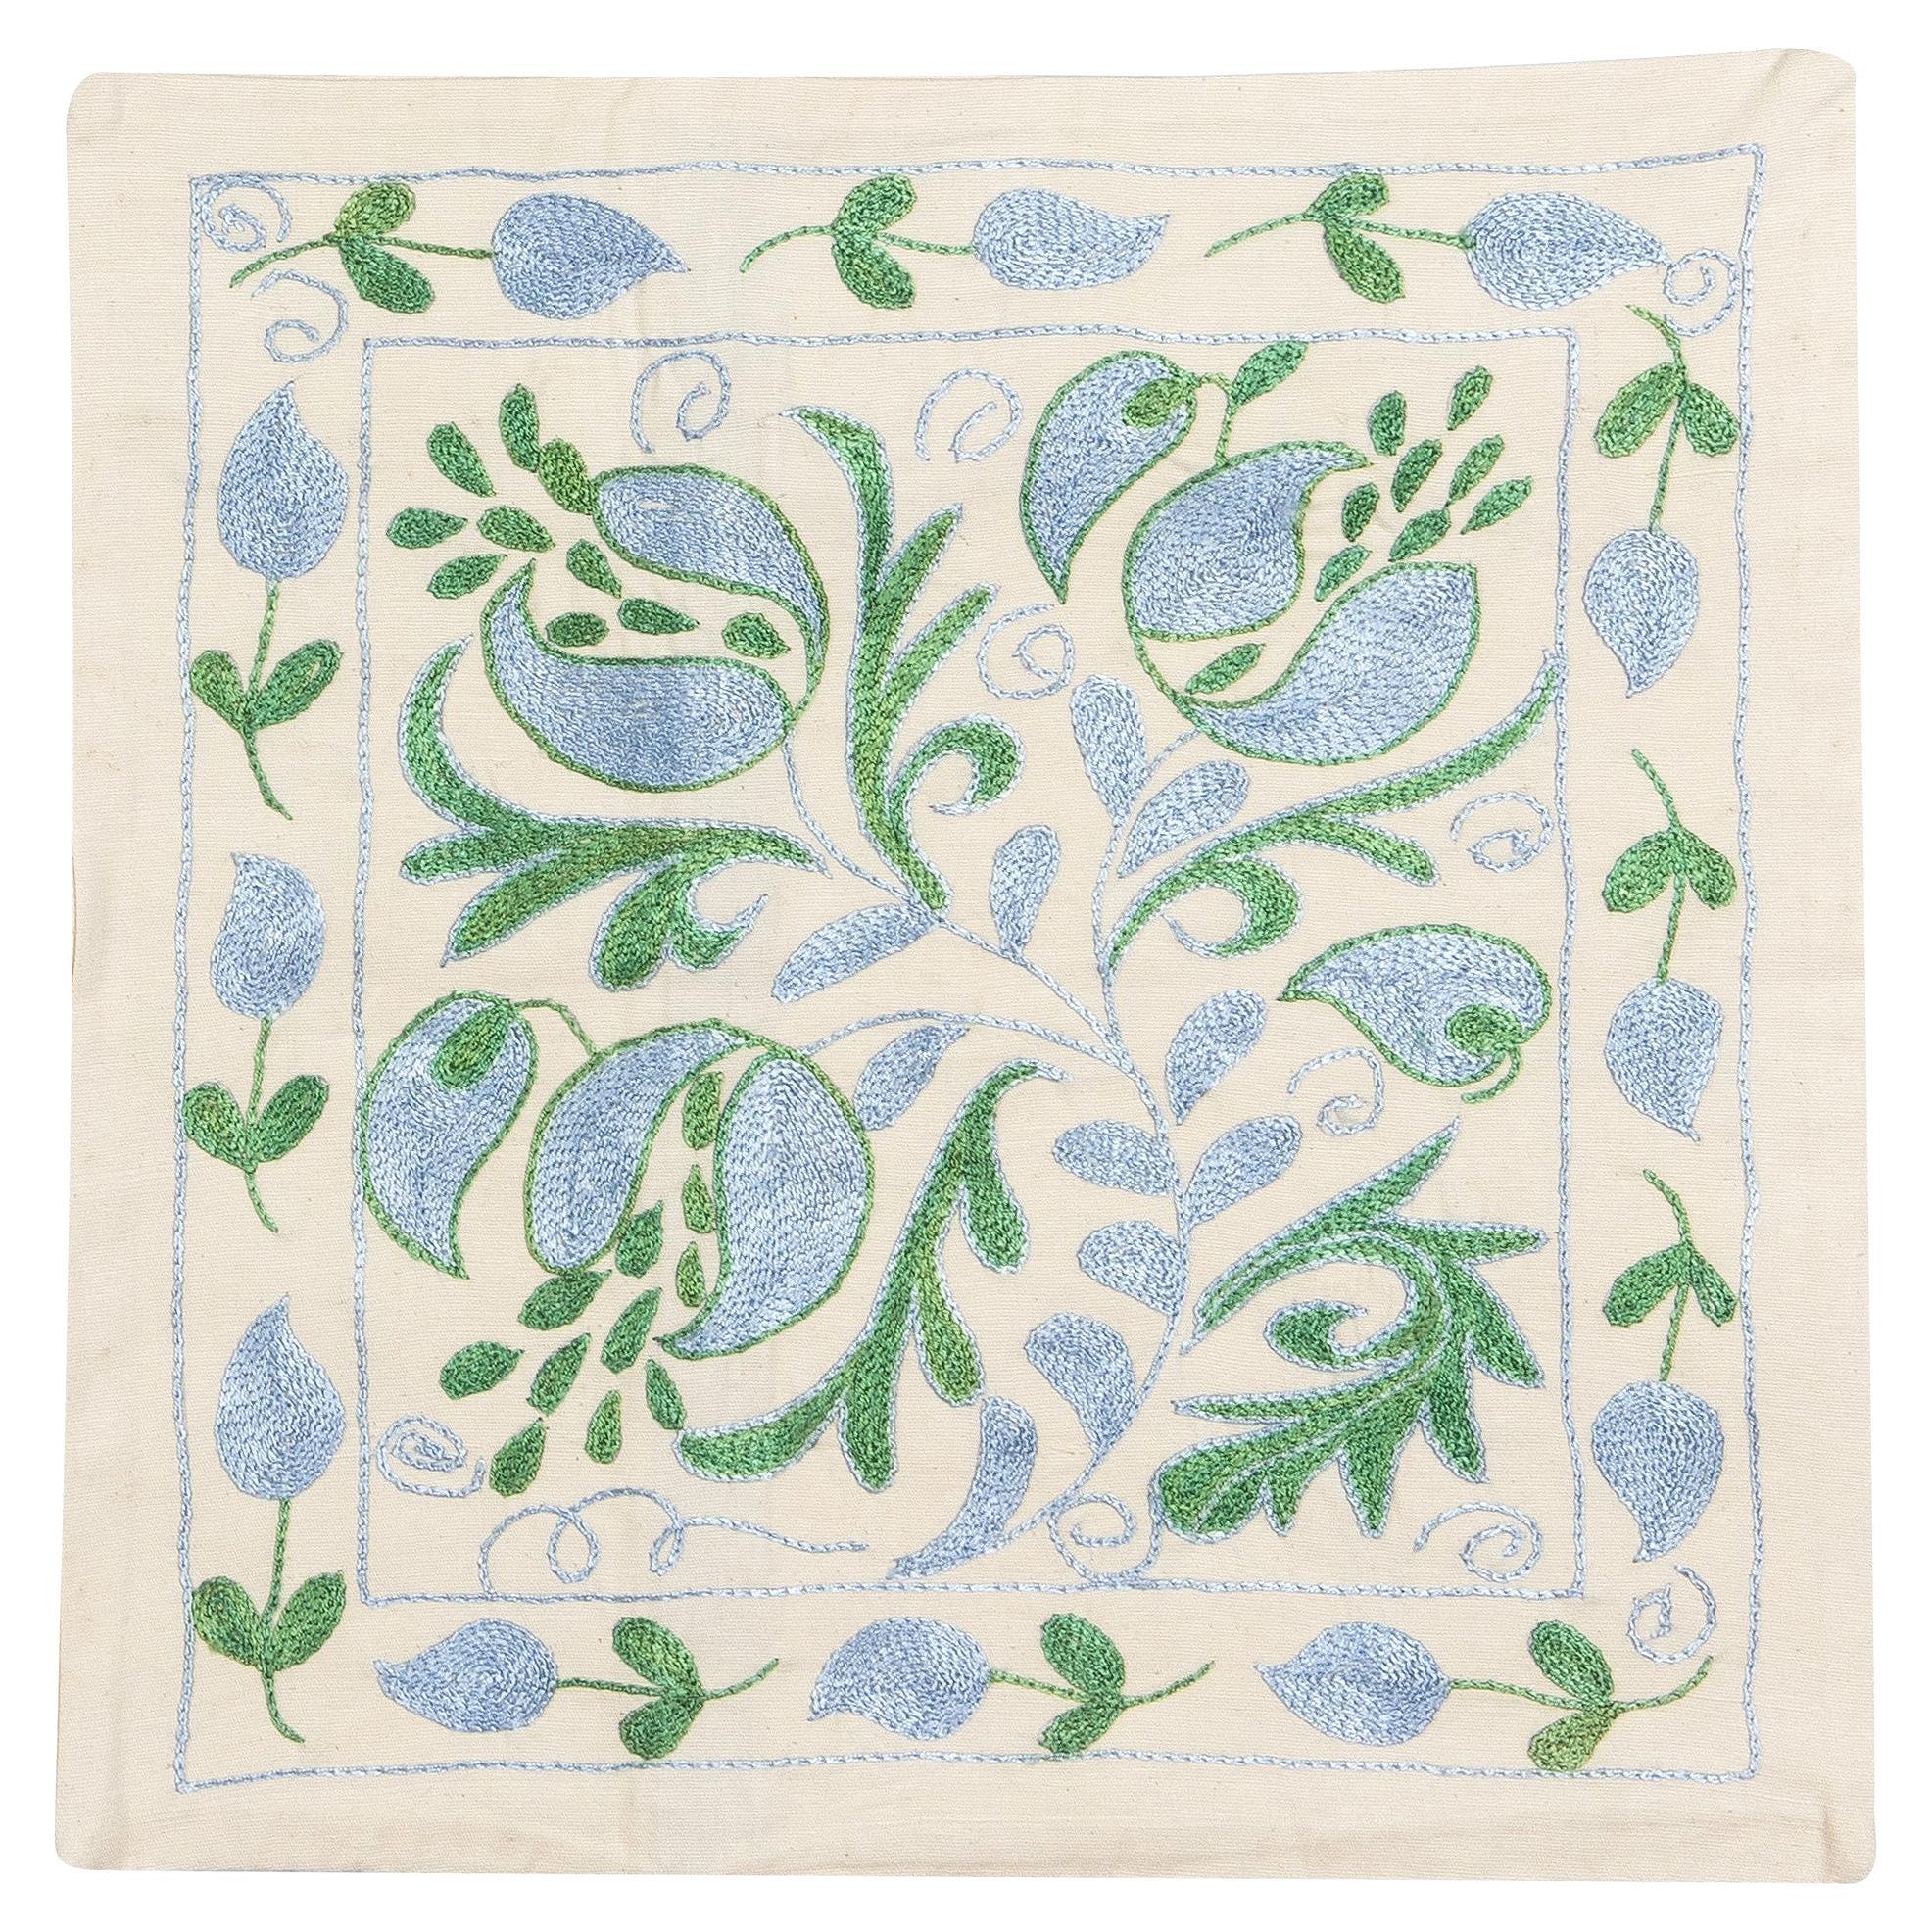 19"x19" Silk Embroidery Suzani Cushion Cover, Uzbek Throw Pillow in Blue & Green